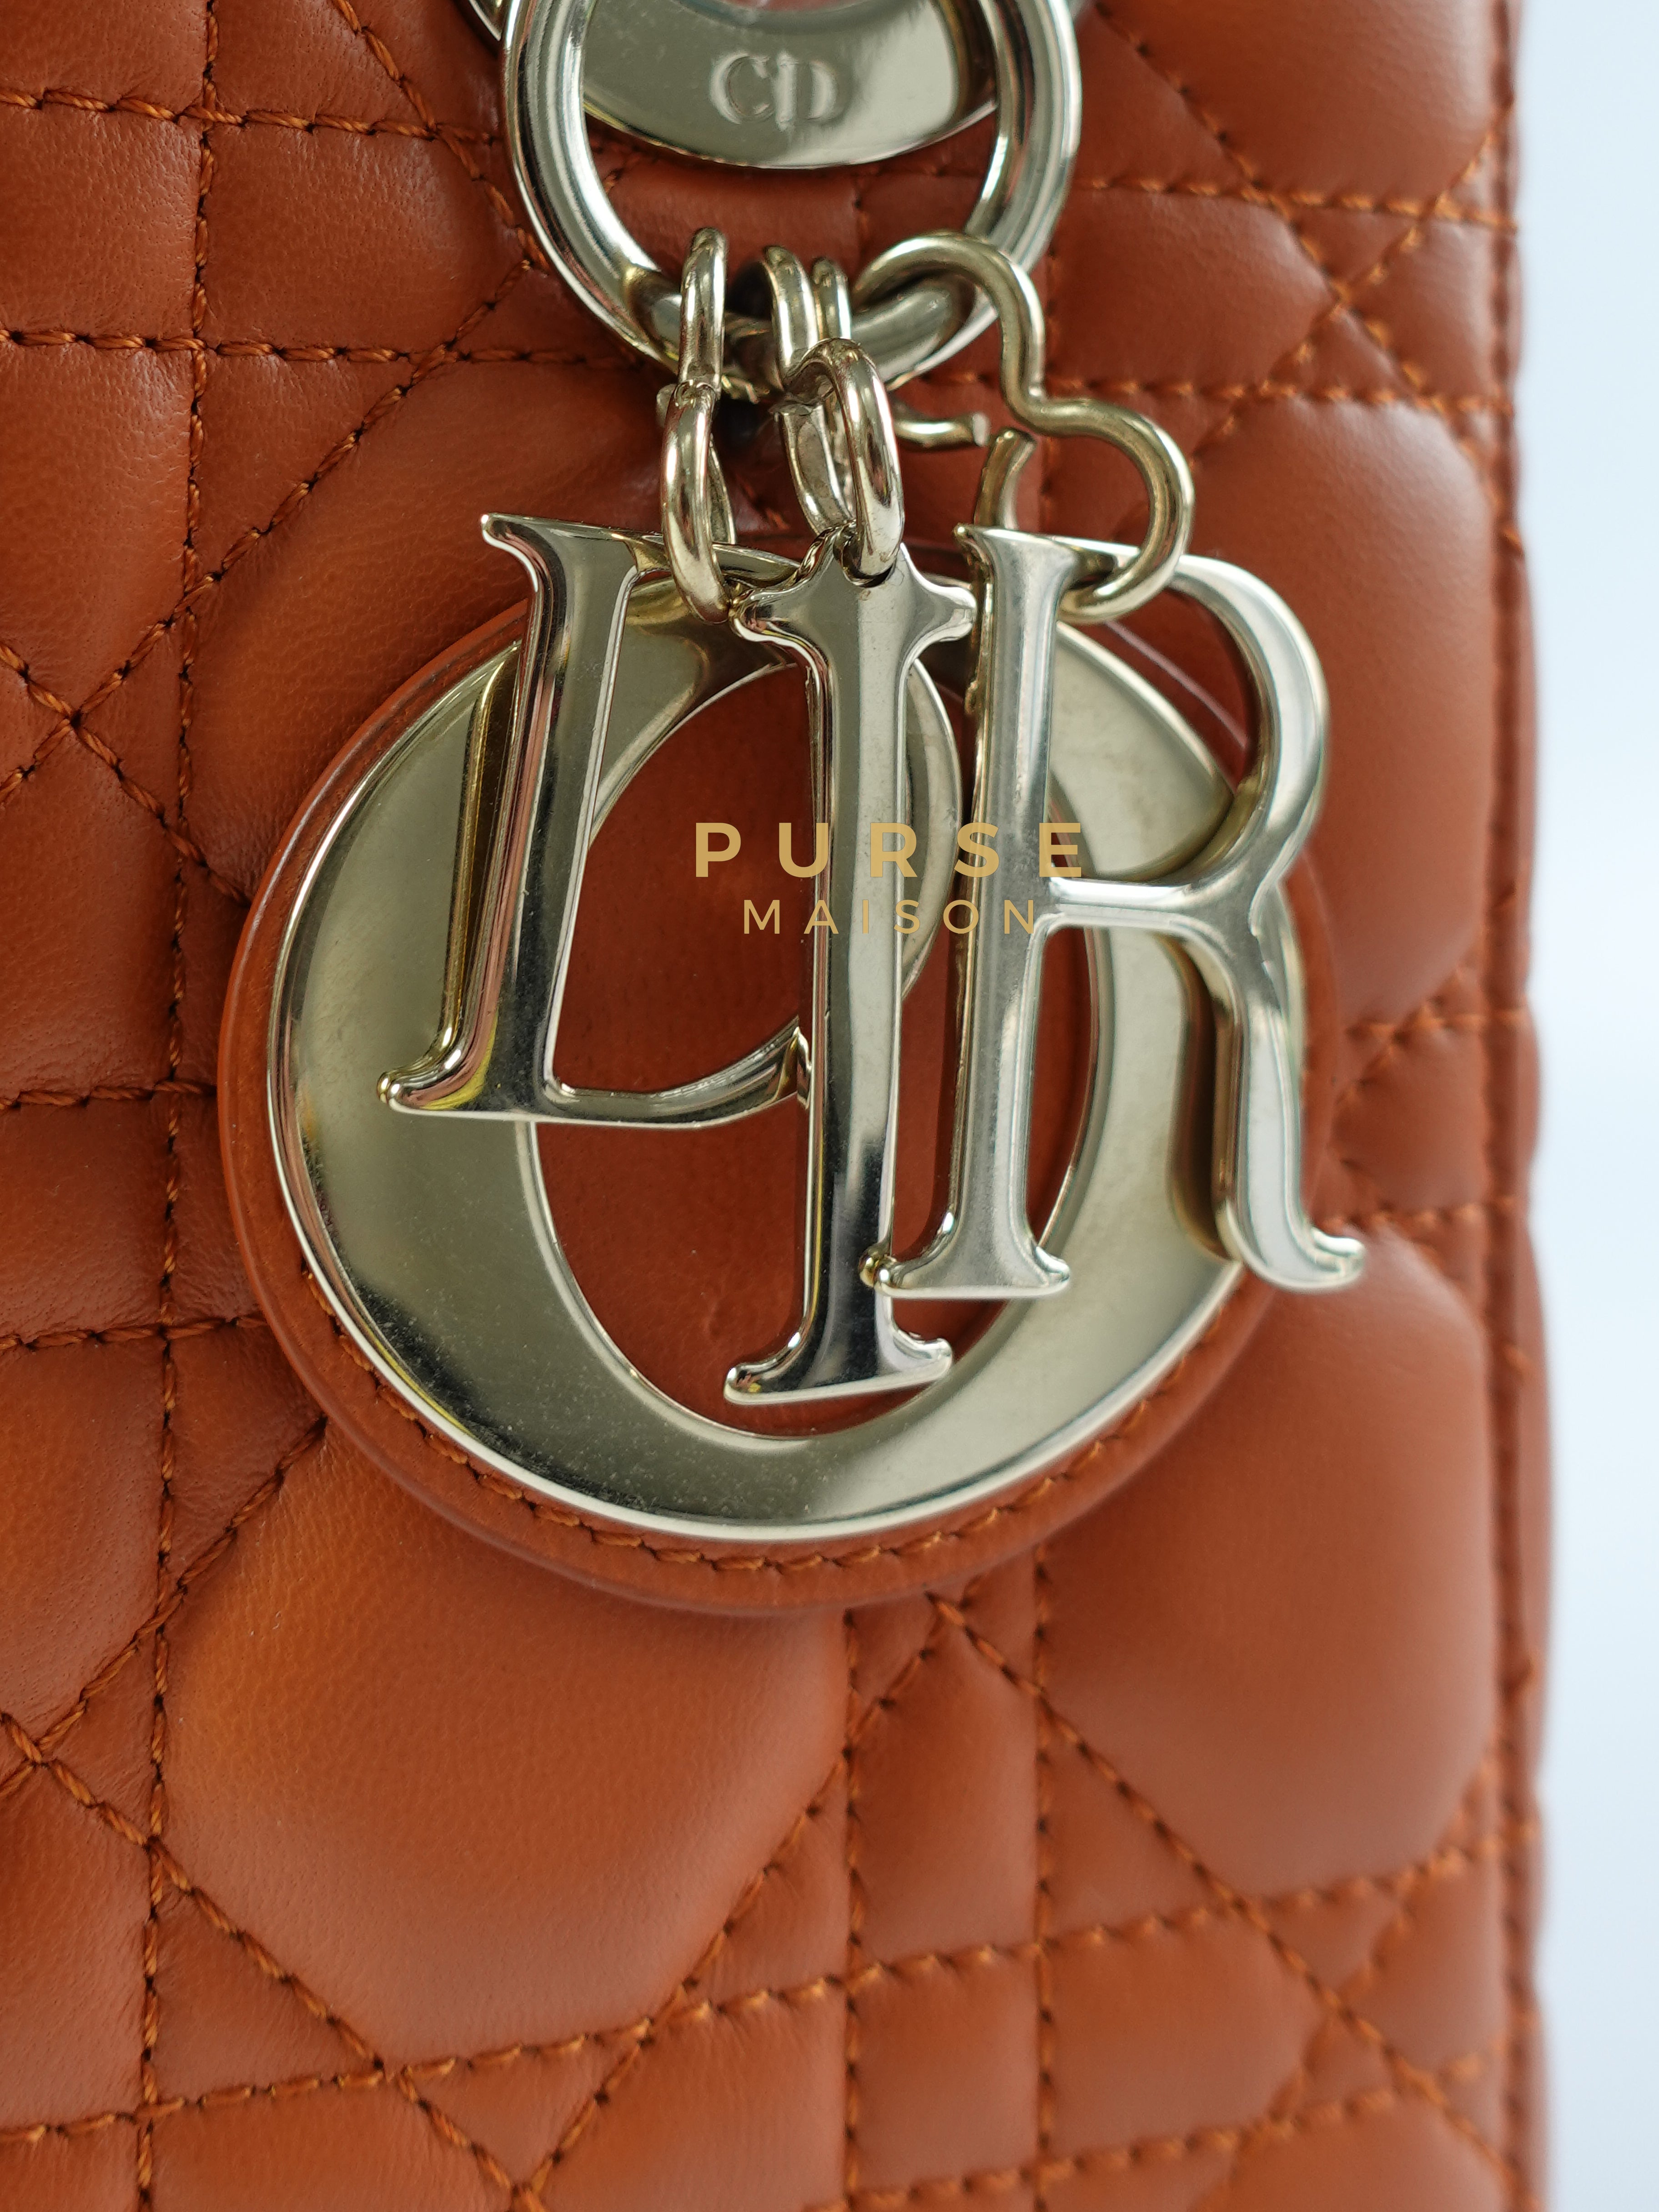 Lady Dior Caramel Small Gold Hardware Lambskin | Purse Maison Luxury Bags Shop